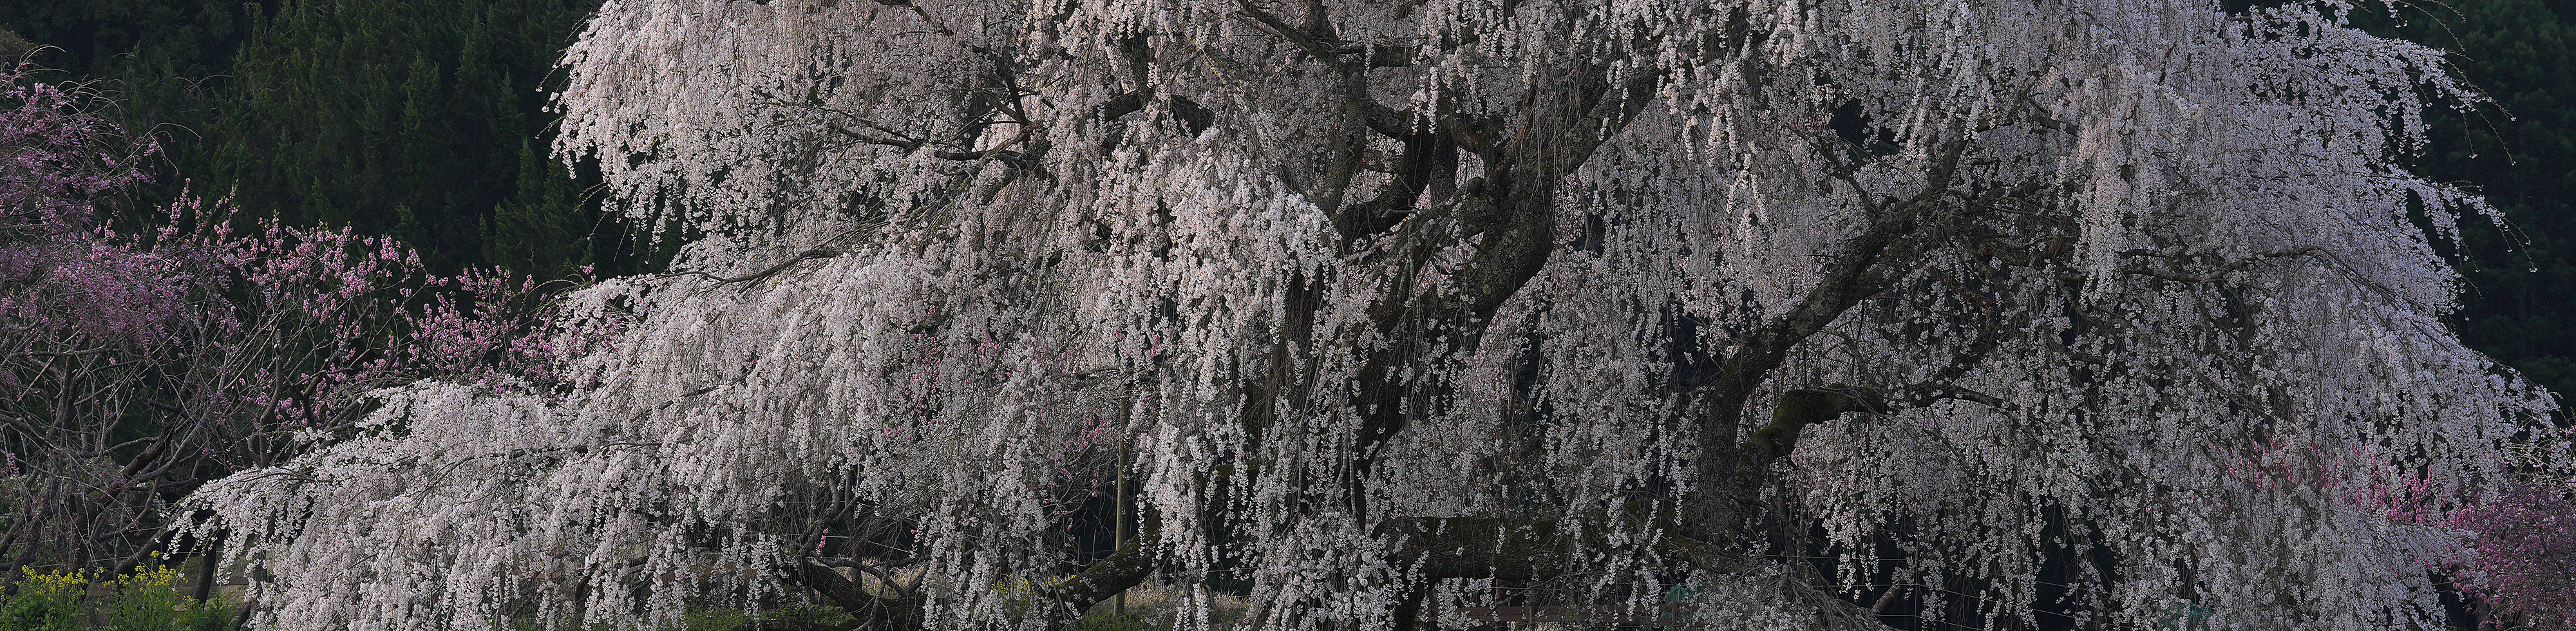 Immagine di ciliegi in piena fioritura